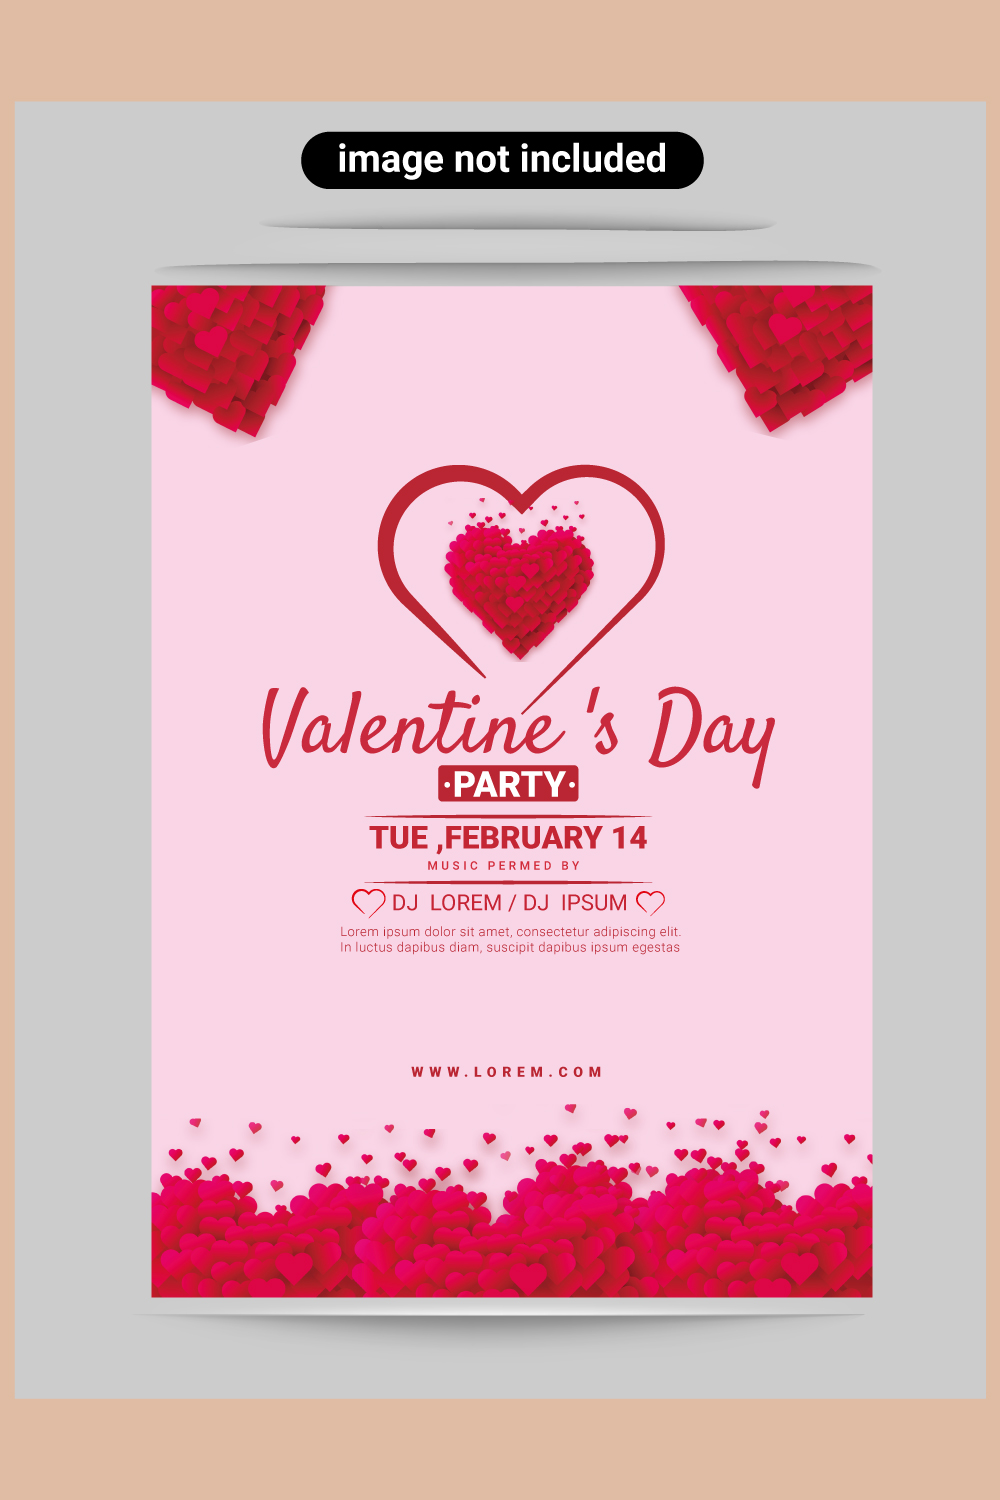 Valentine day flyer design pinterest preview image.